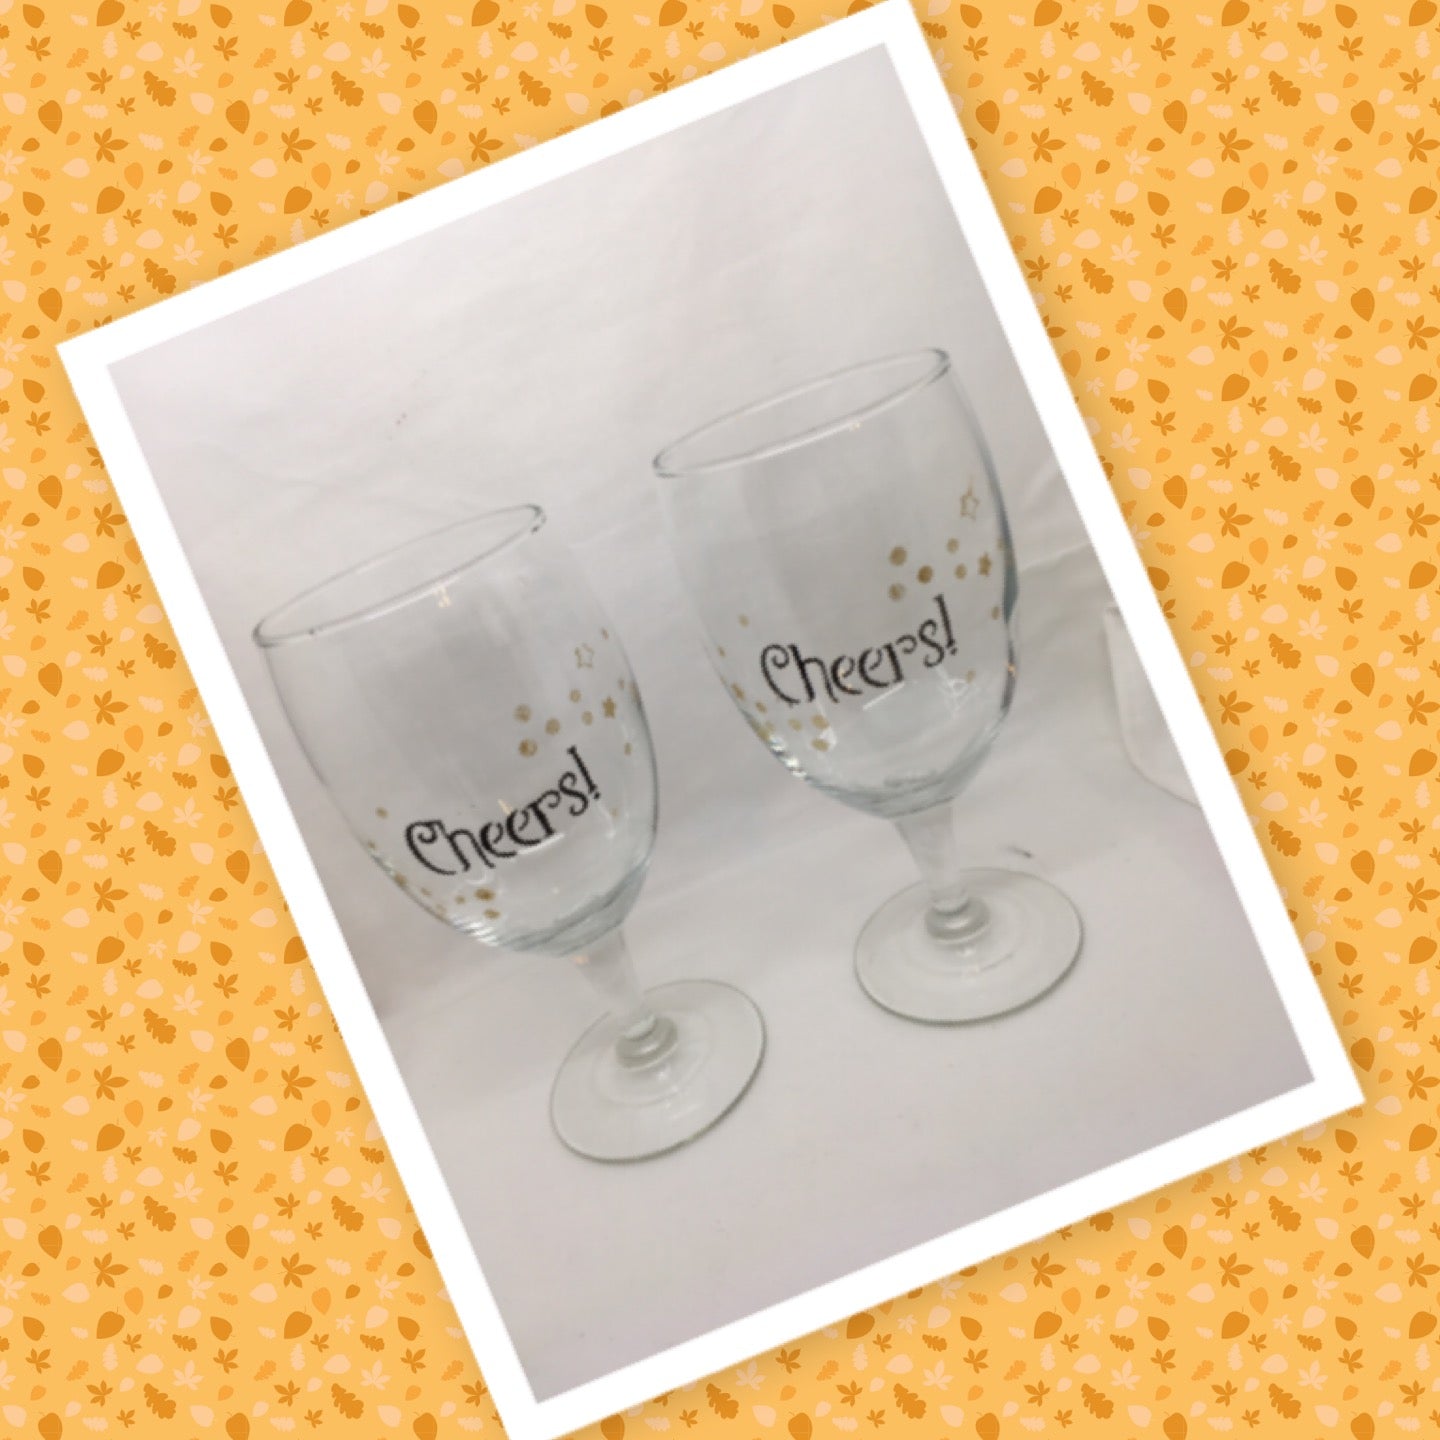 CHEERS Glasses Stemware Glasses Wine Glasses Barware Party Set of